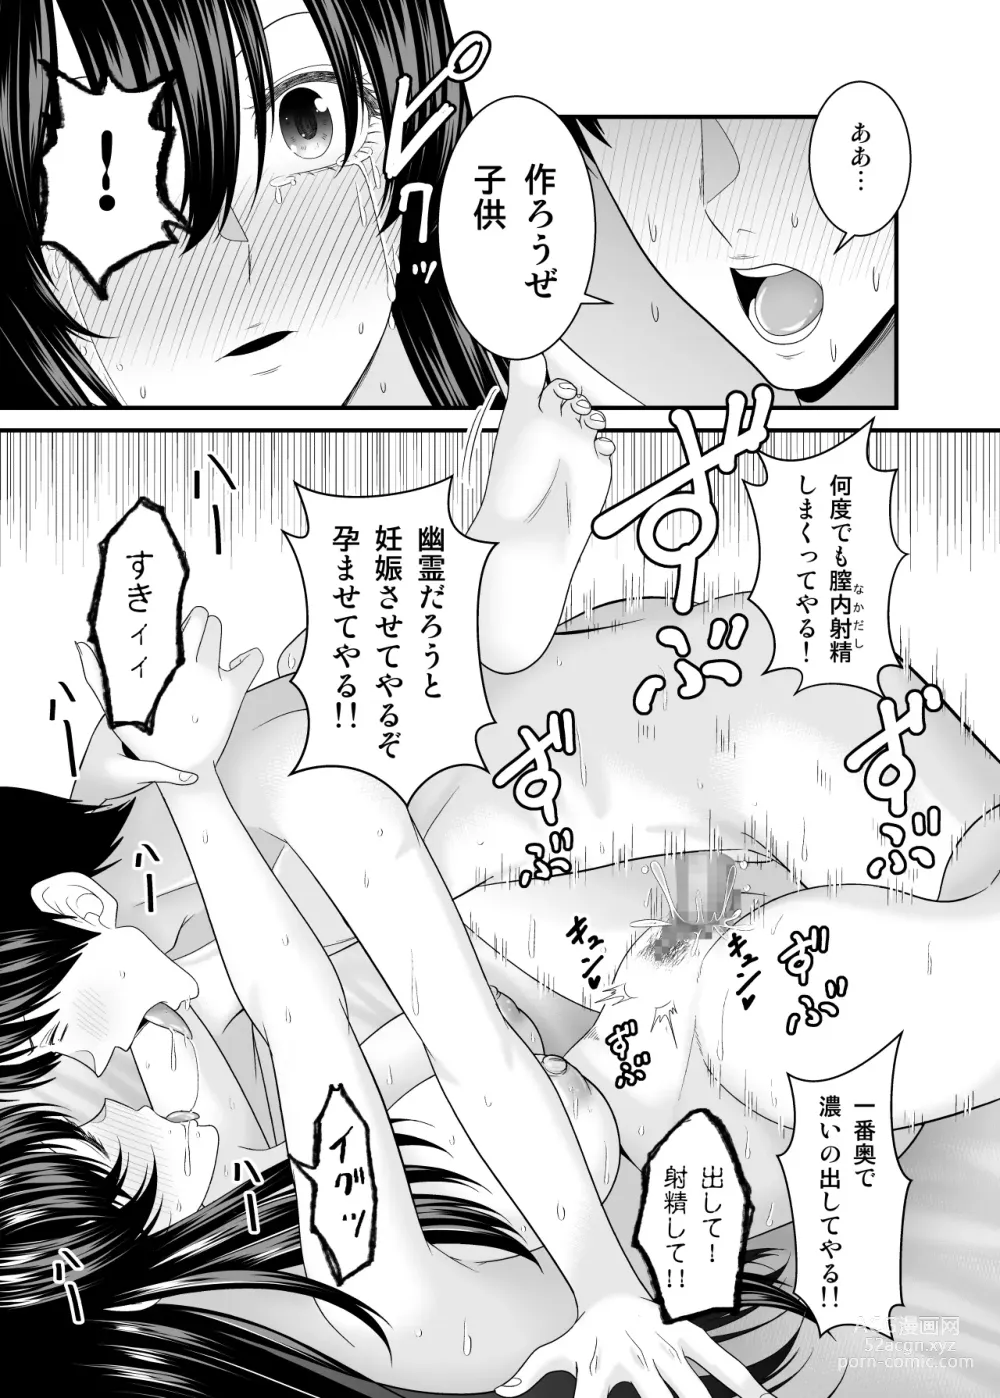 Page 44 of doujinshi ヤバい事故物件に女幽霊が出たけど無職底辺の俺はセックスしまくる